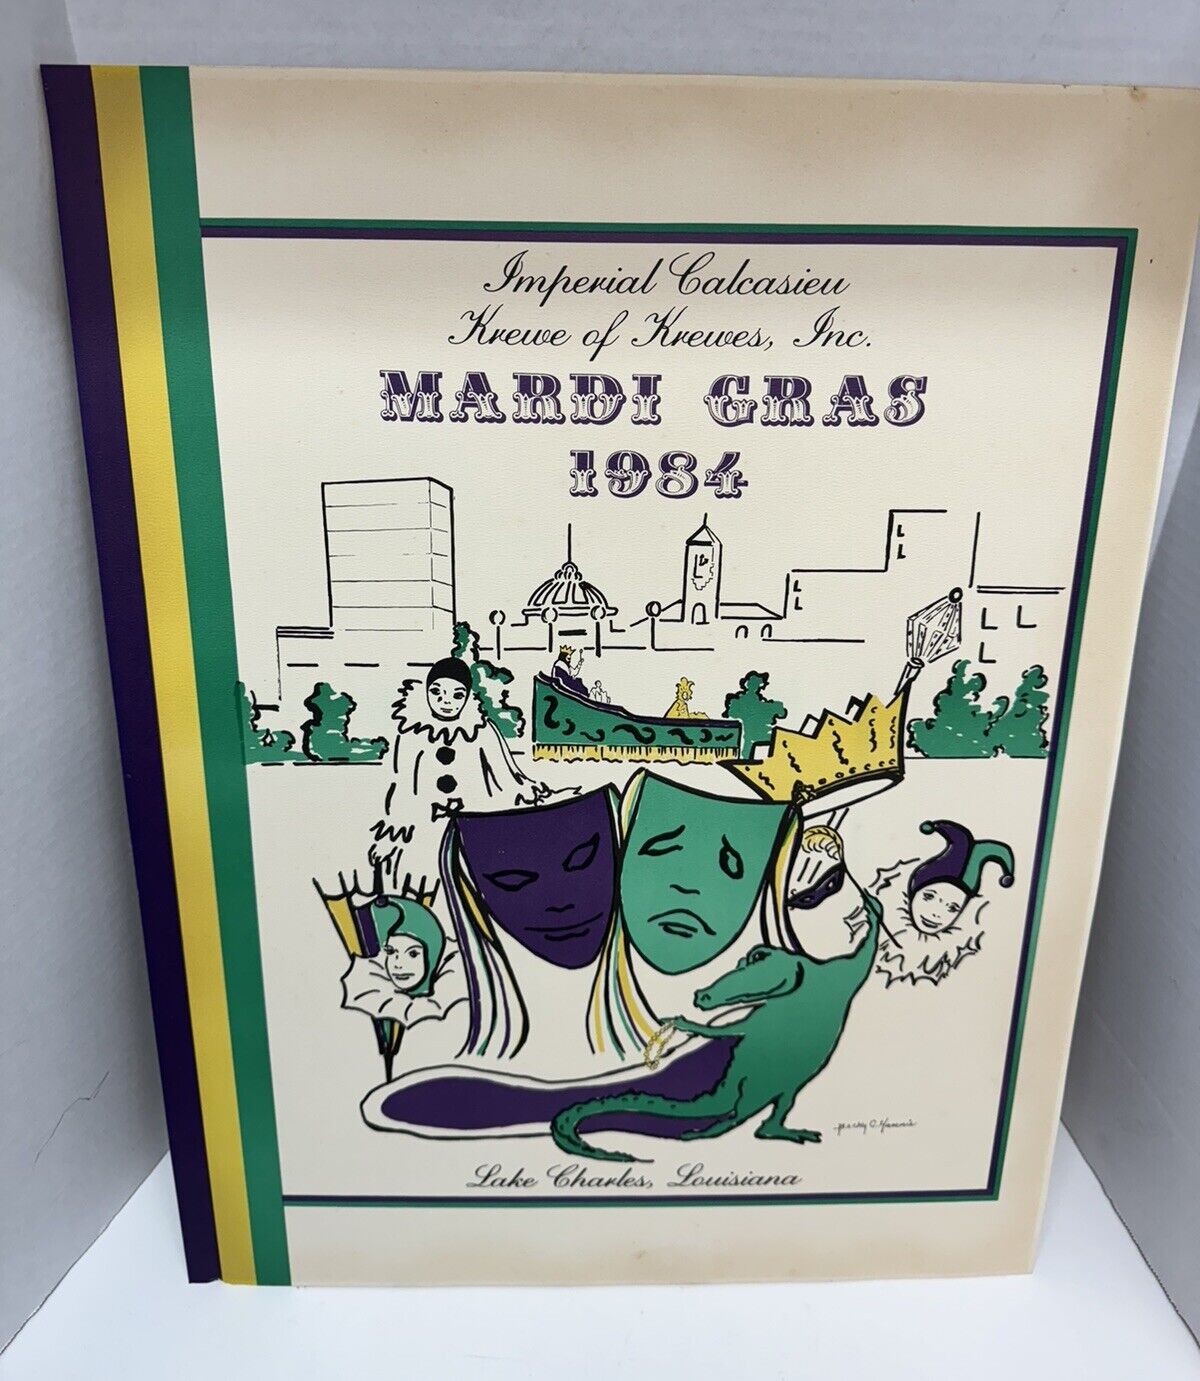 Mardi Gras 1984 Lake Charles Louisiana Poster